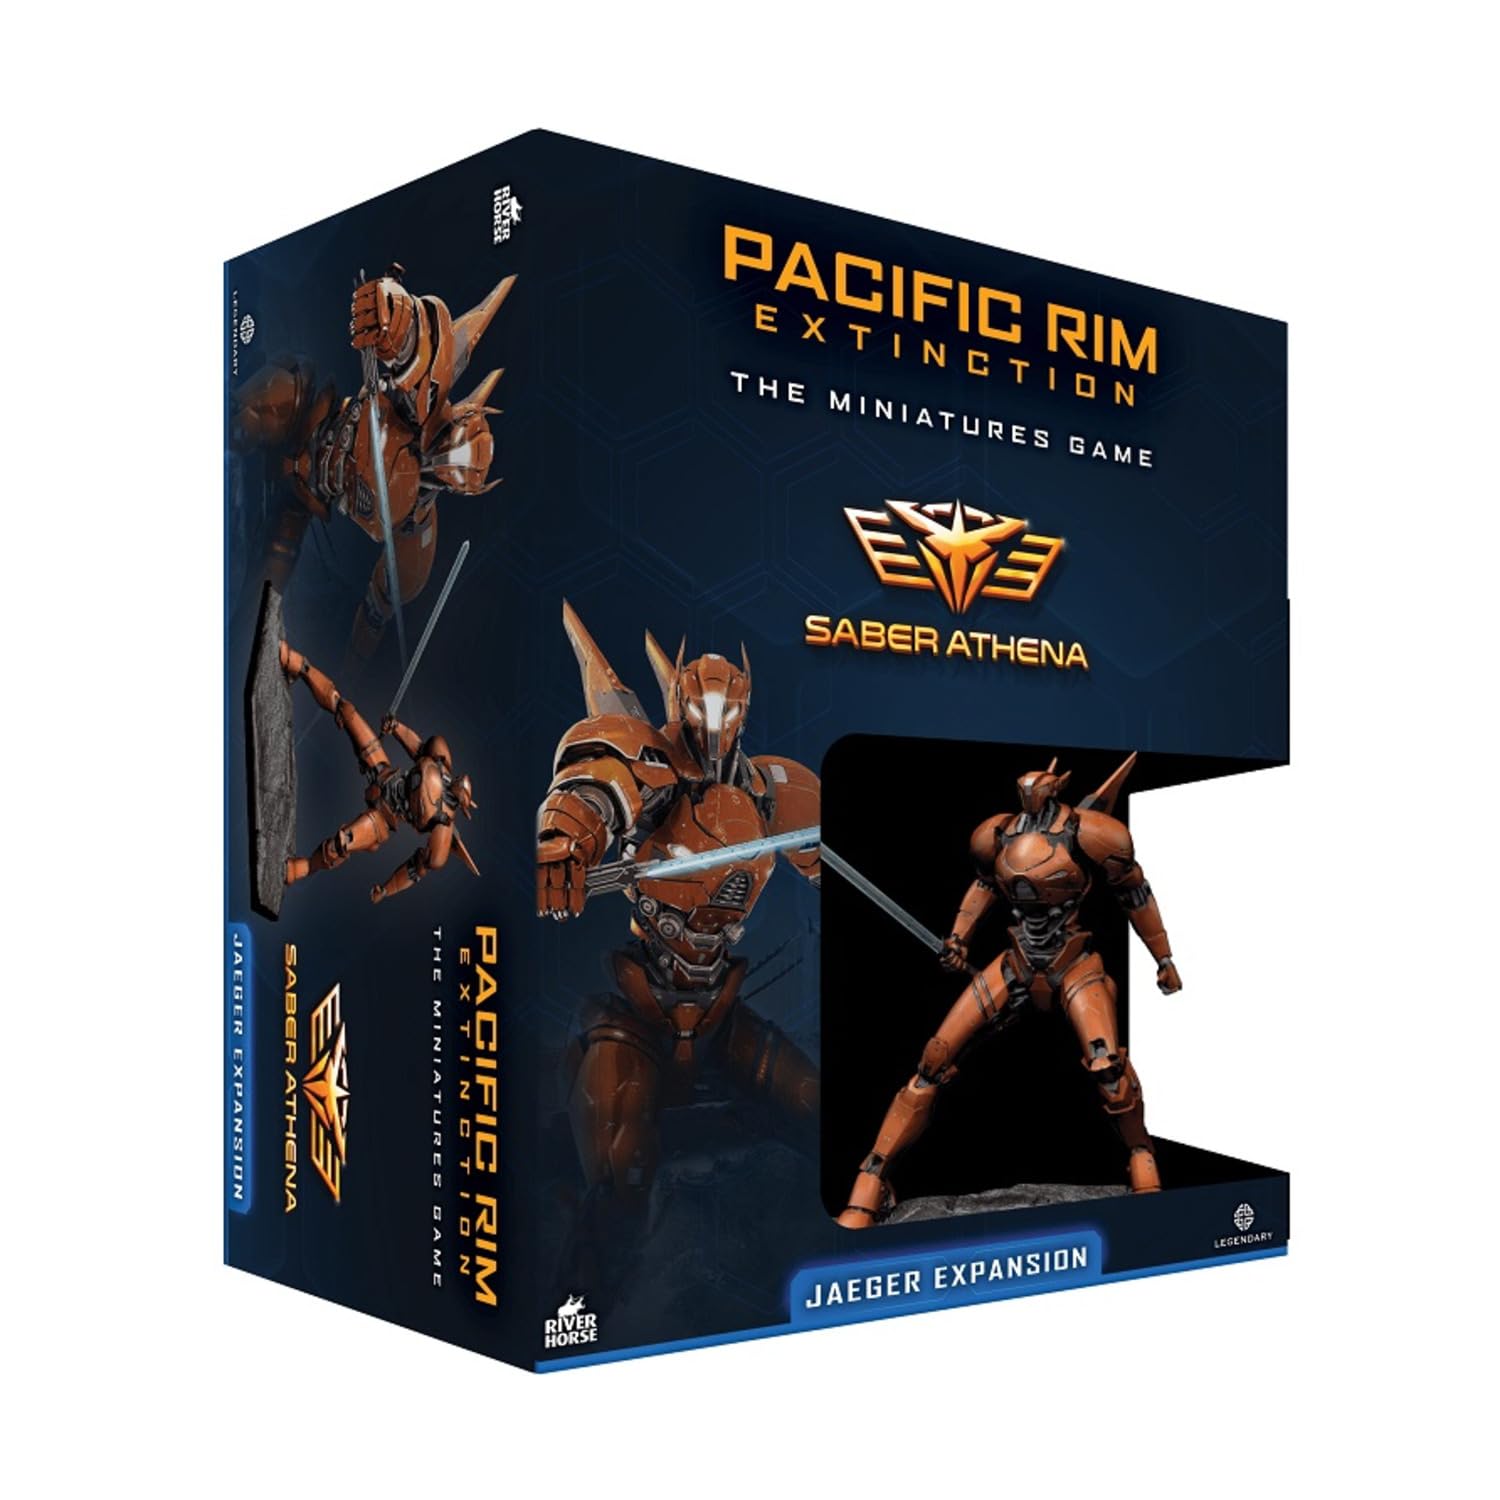 River Horse Miniatures Games Pacific Rim: Extinction Miniatures Game - Saber Athena Jaeger Expansion